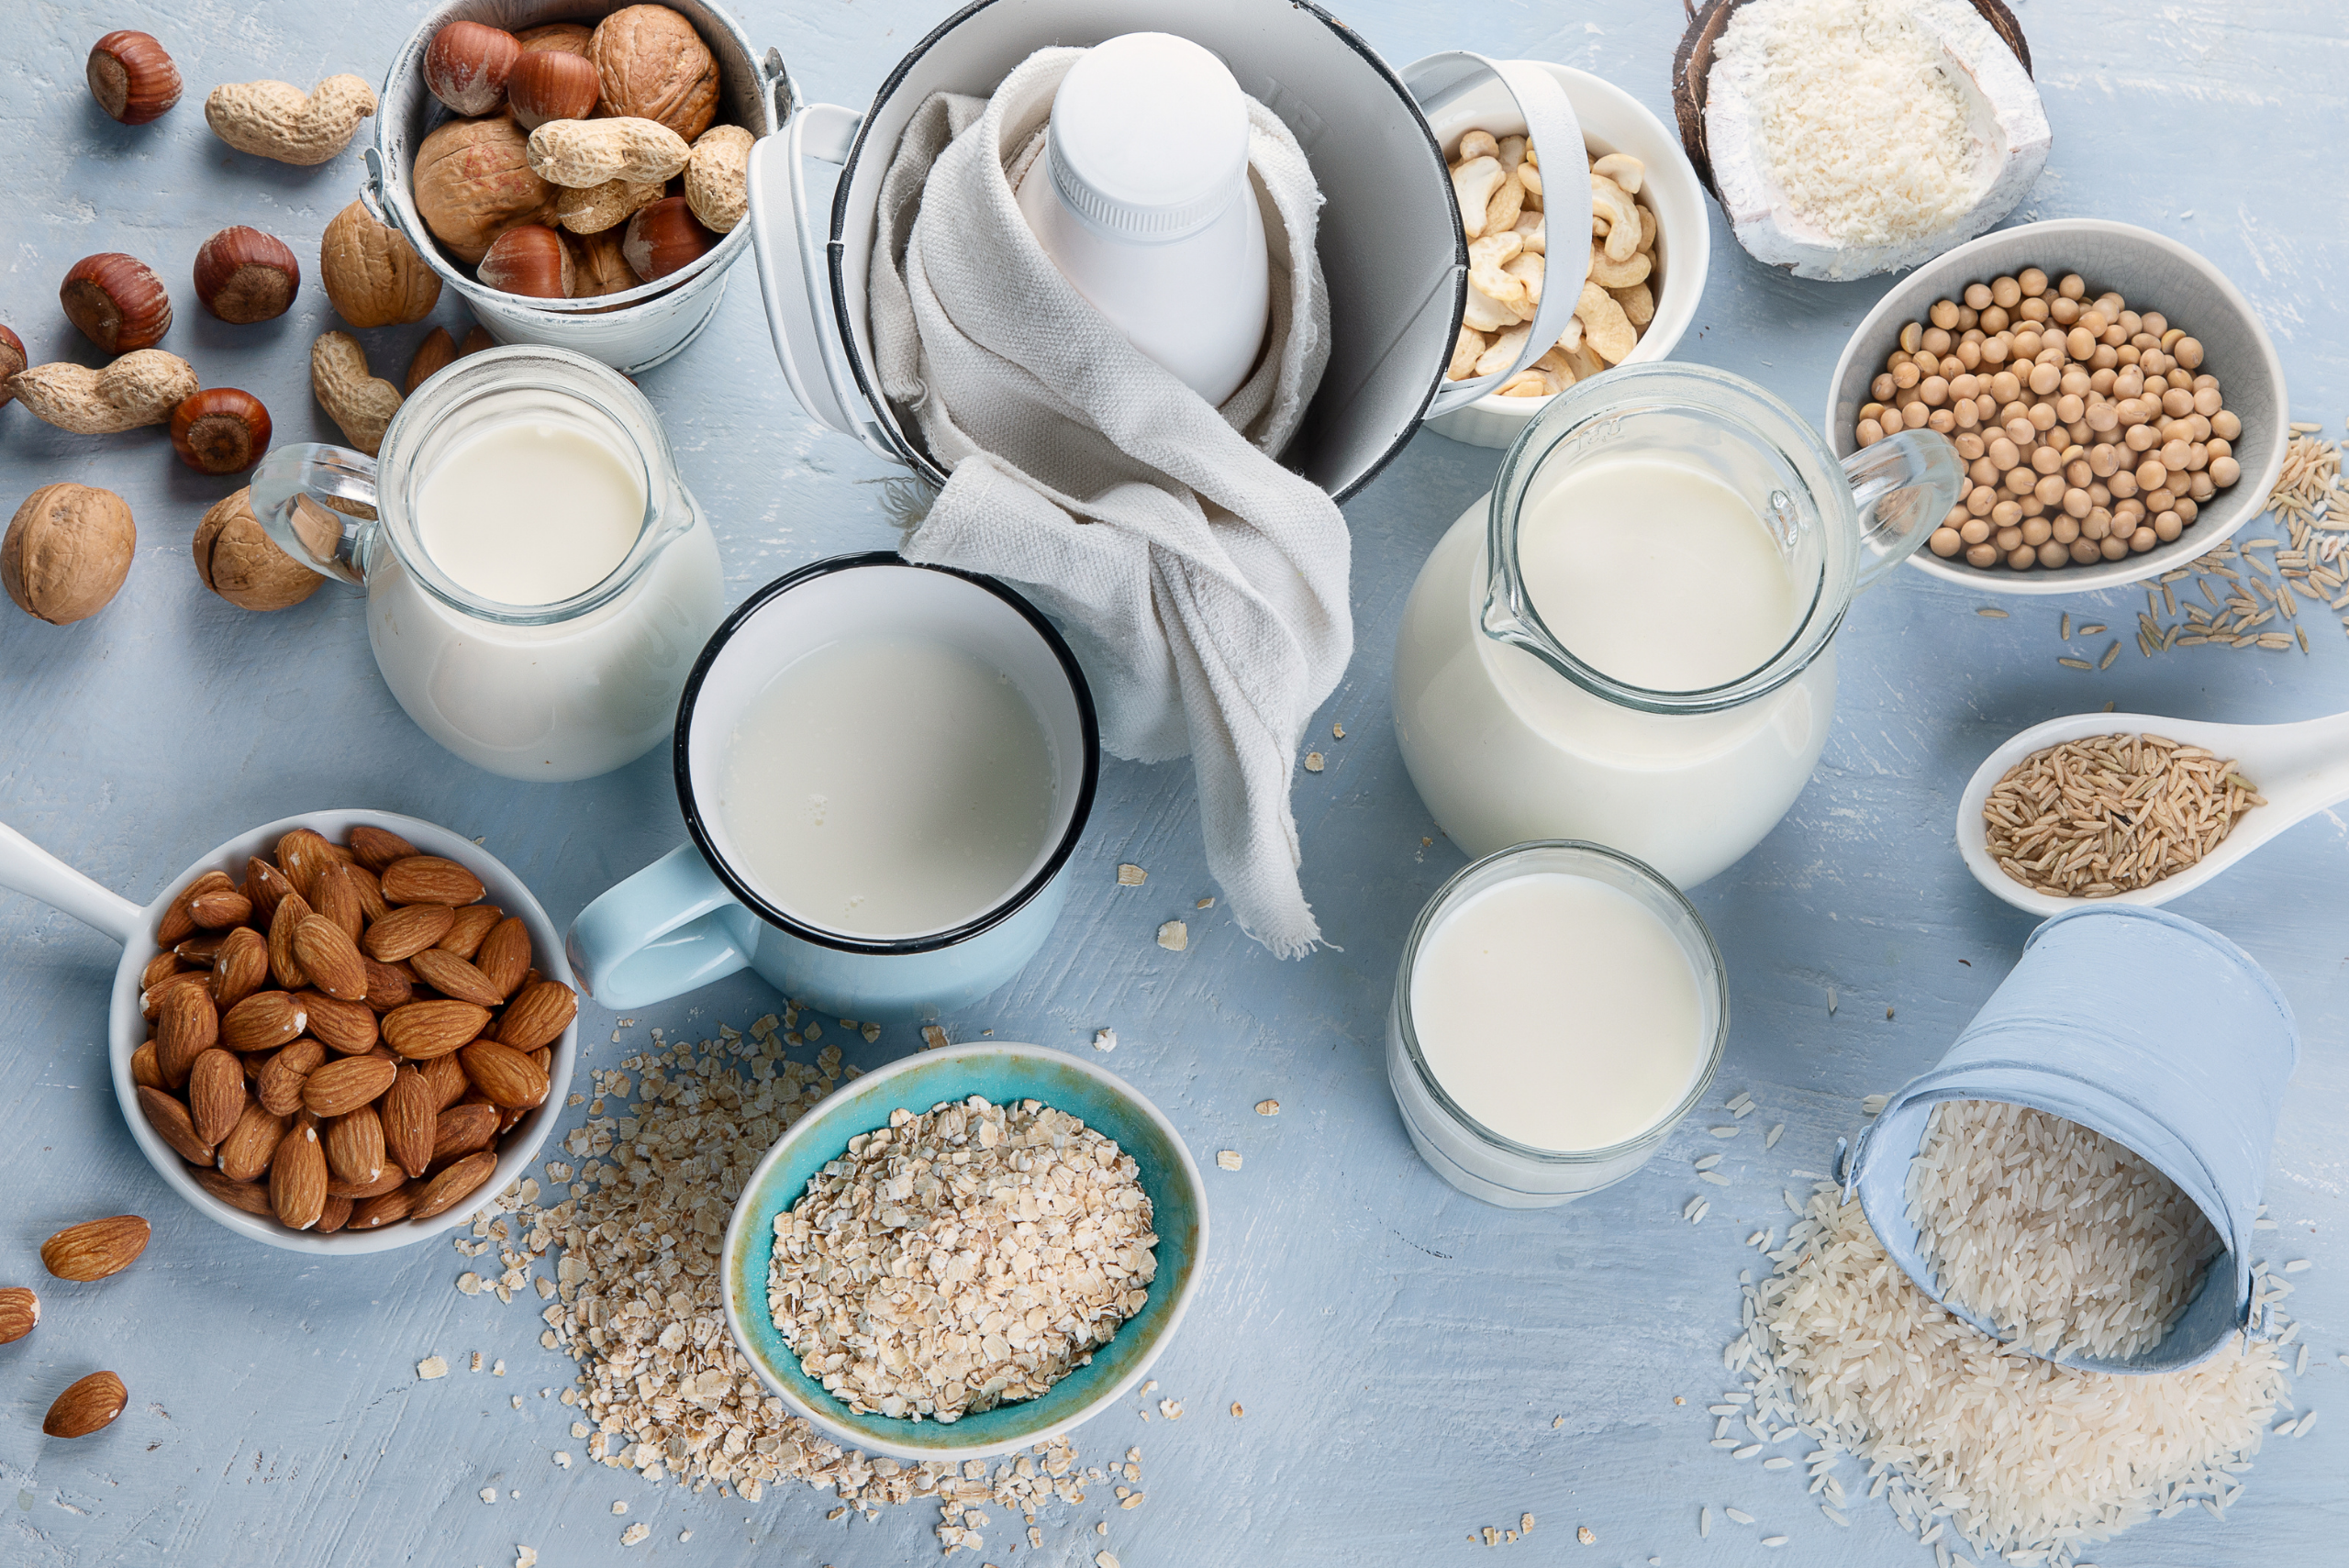 Homemade Plant-Based Milk, Is It Worth It?